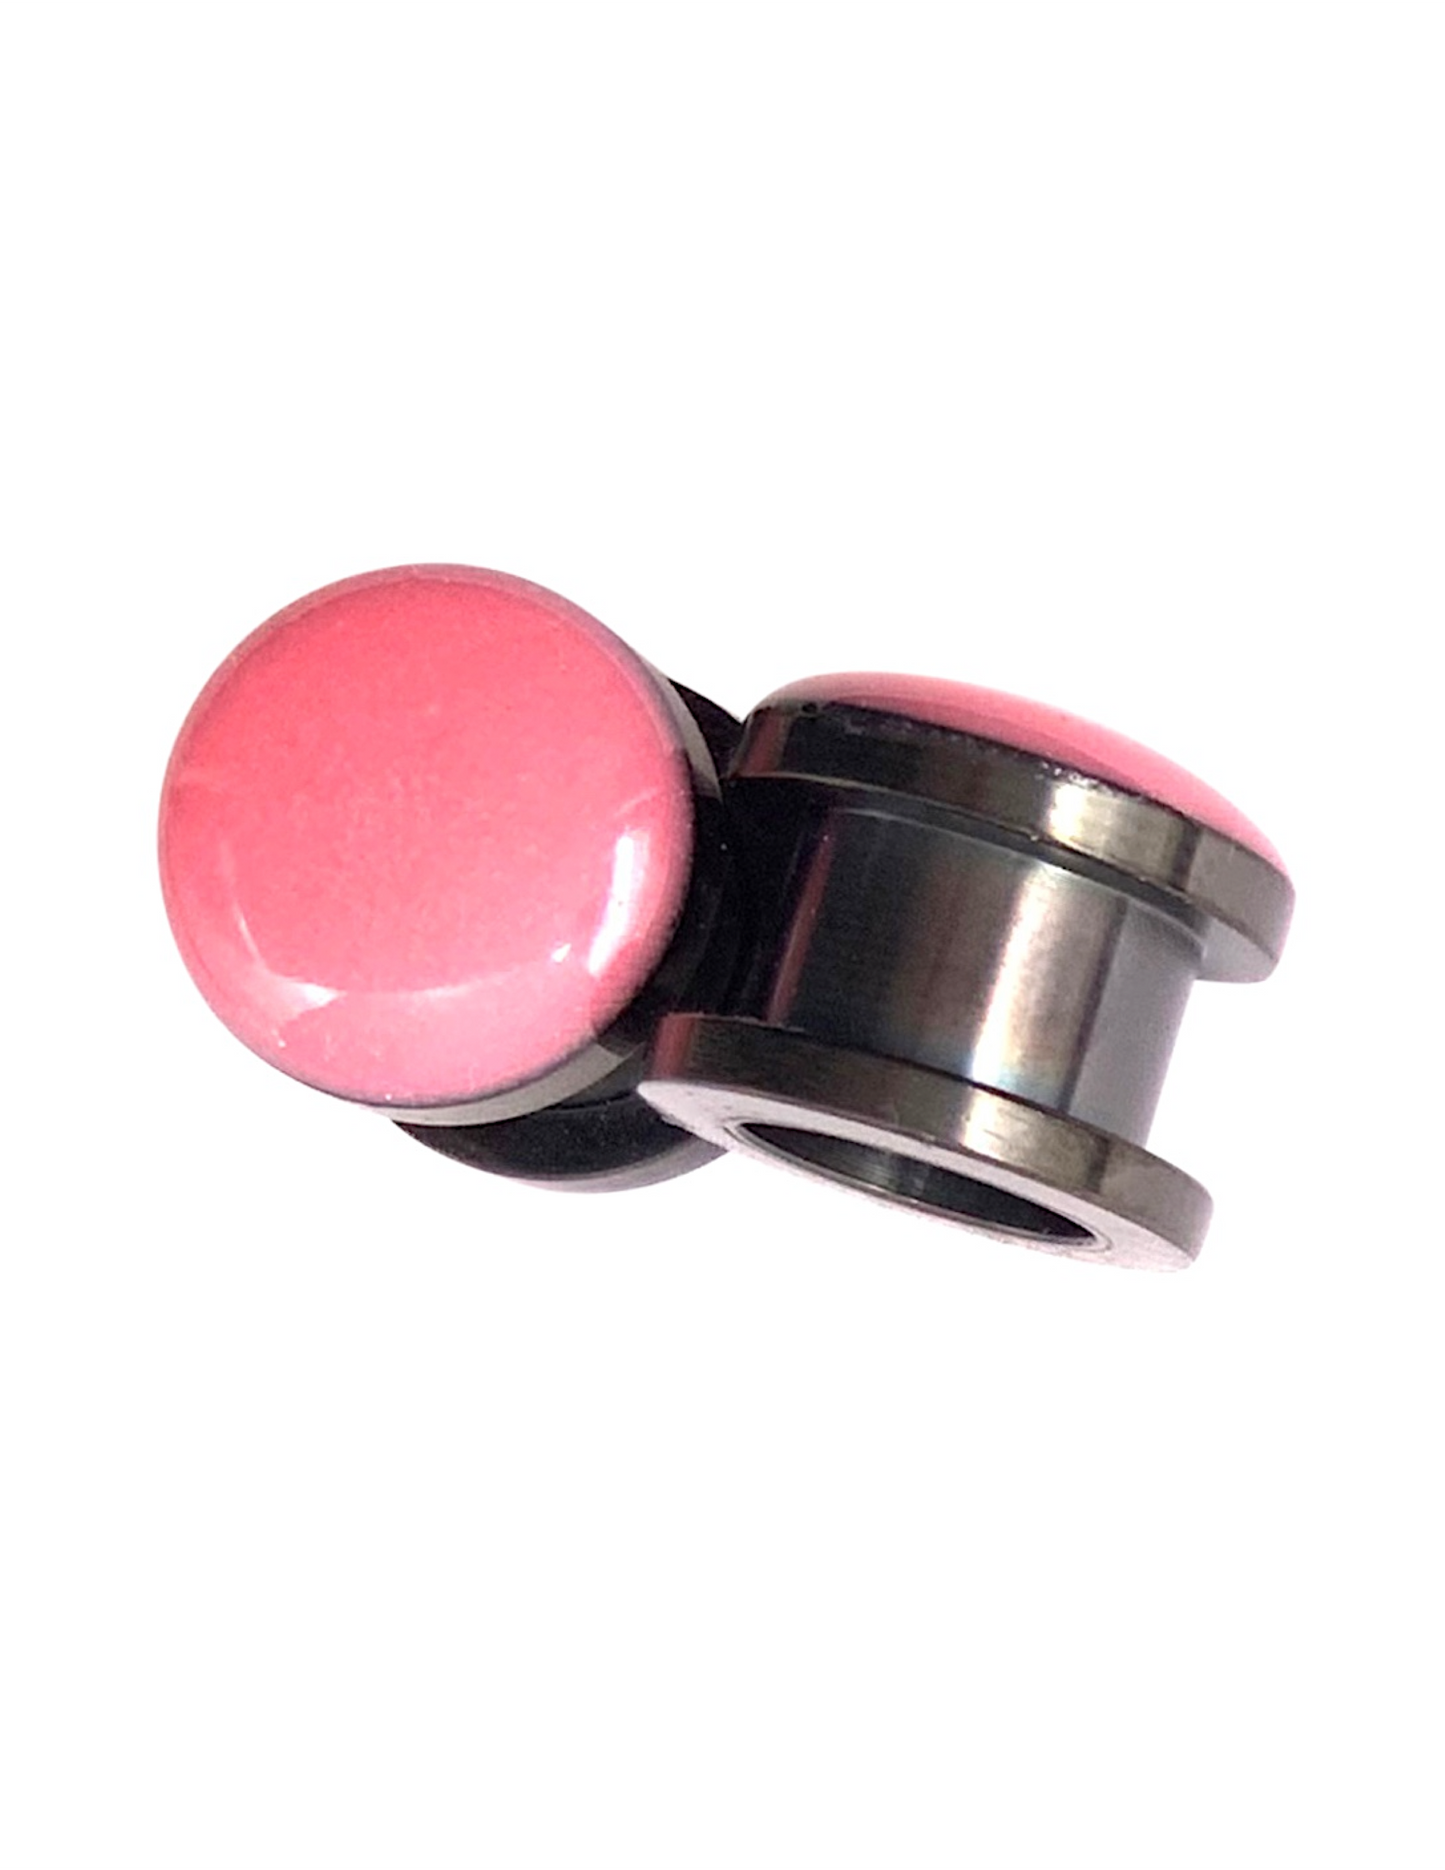 Sweet Pink Shimmer Gloss Plugs